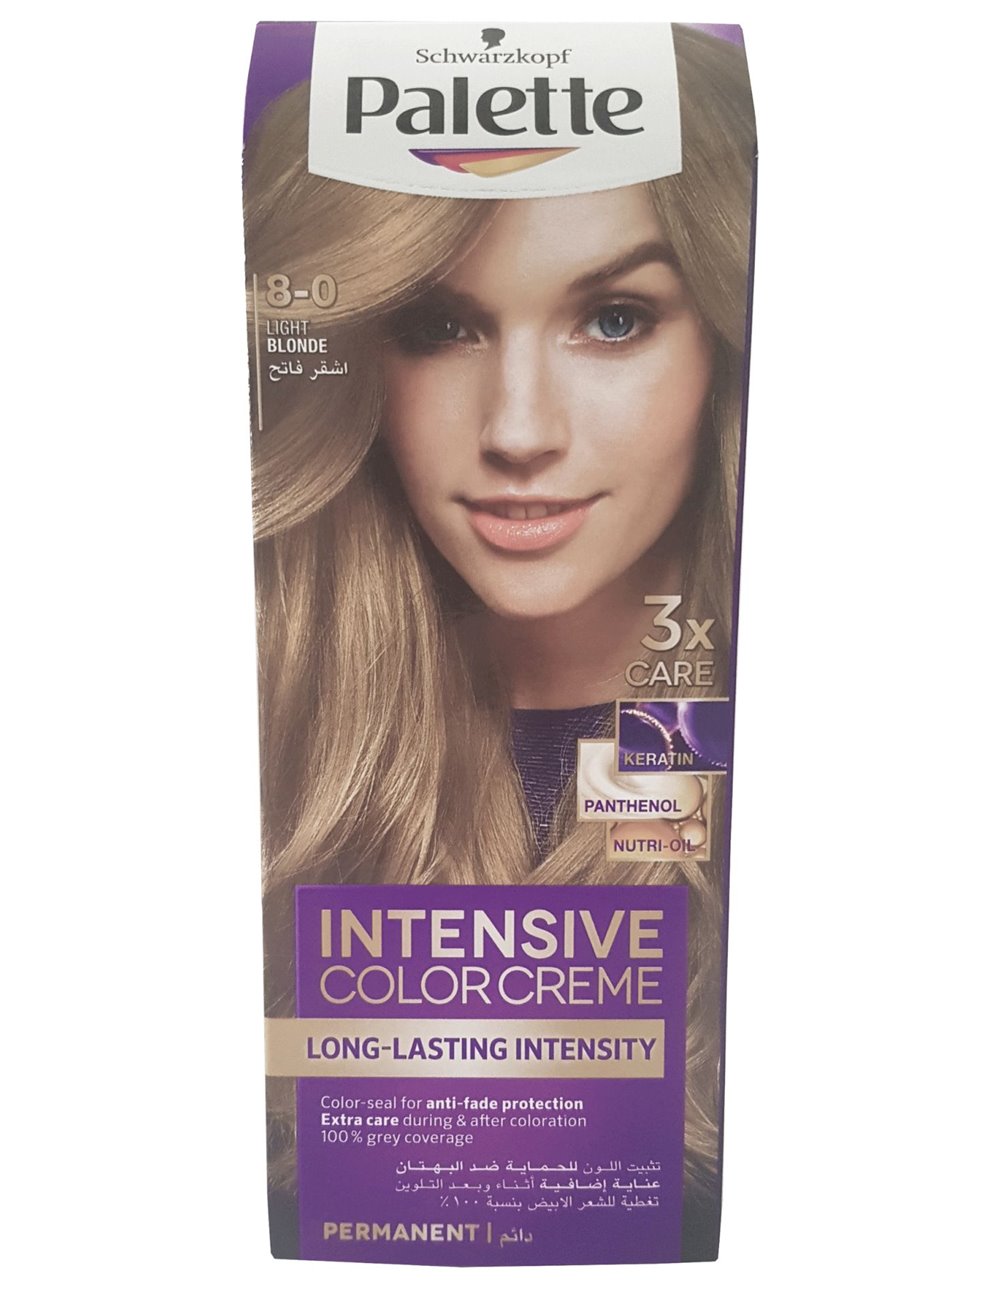 Palette Intensive Color Creme N7 Jasny Blond Farba do Włosów 1 szt